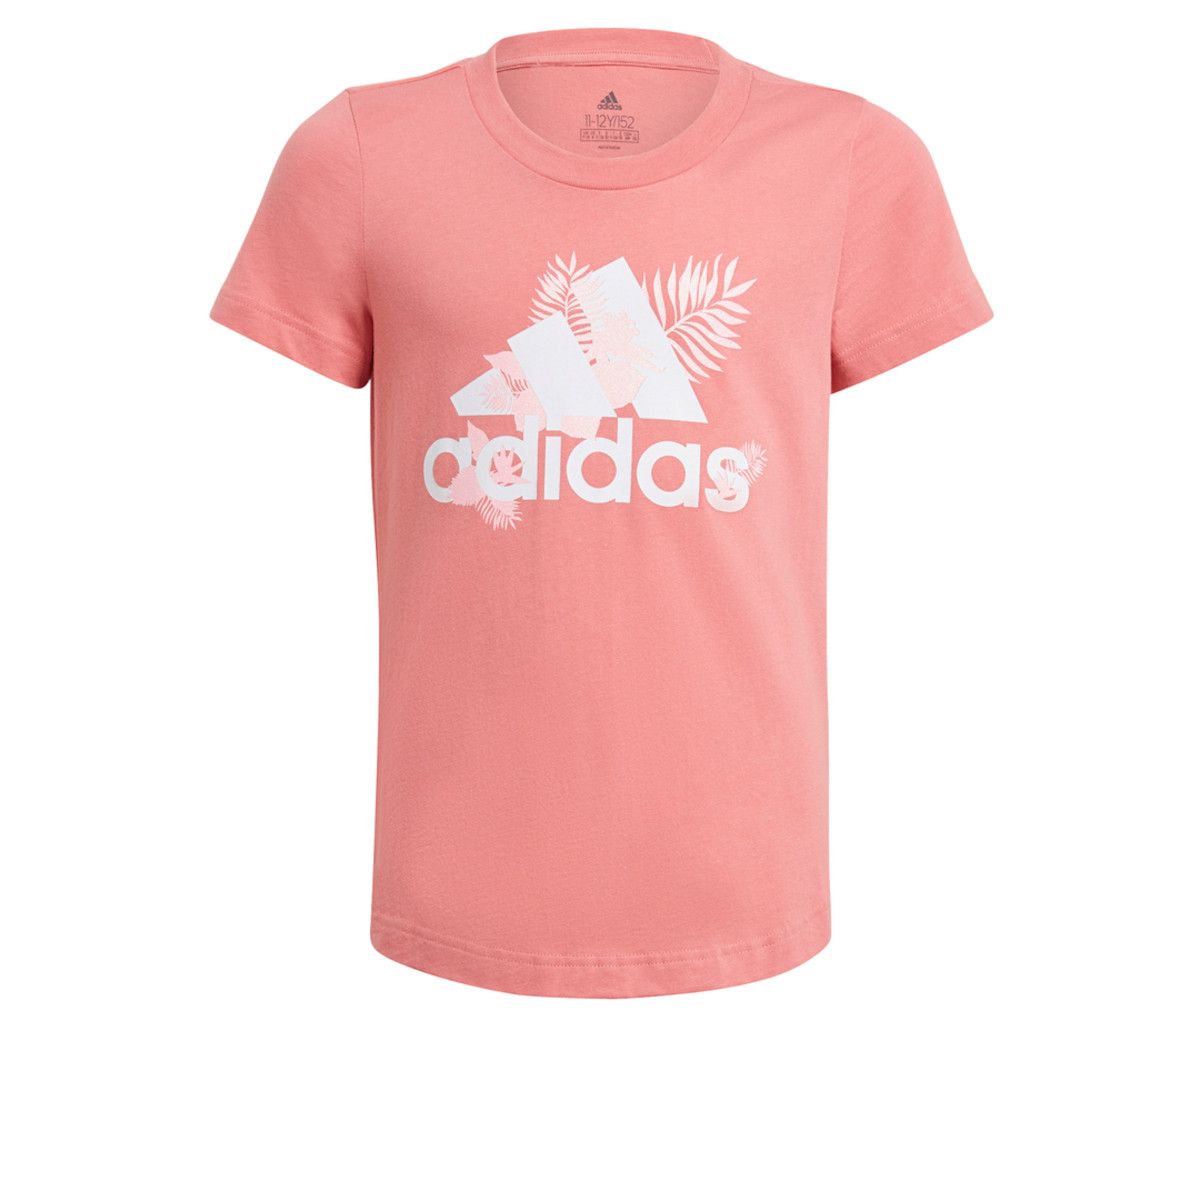 adidas Tropical Sports Graphic Girl's T-shirt GJ6514